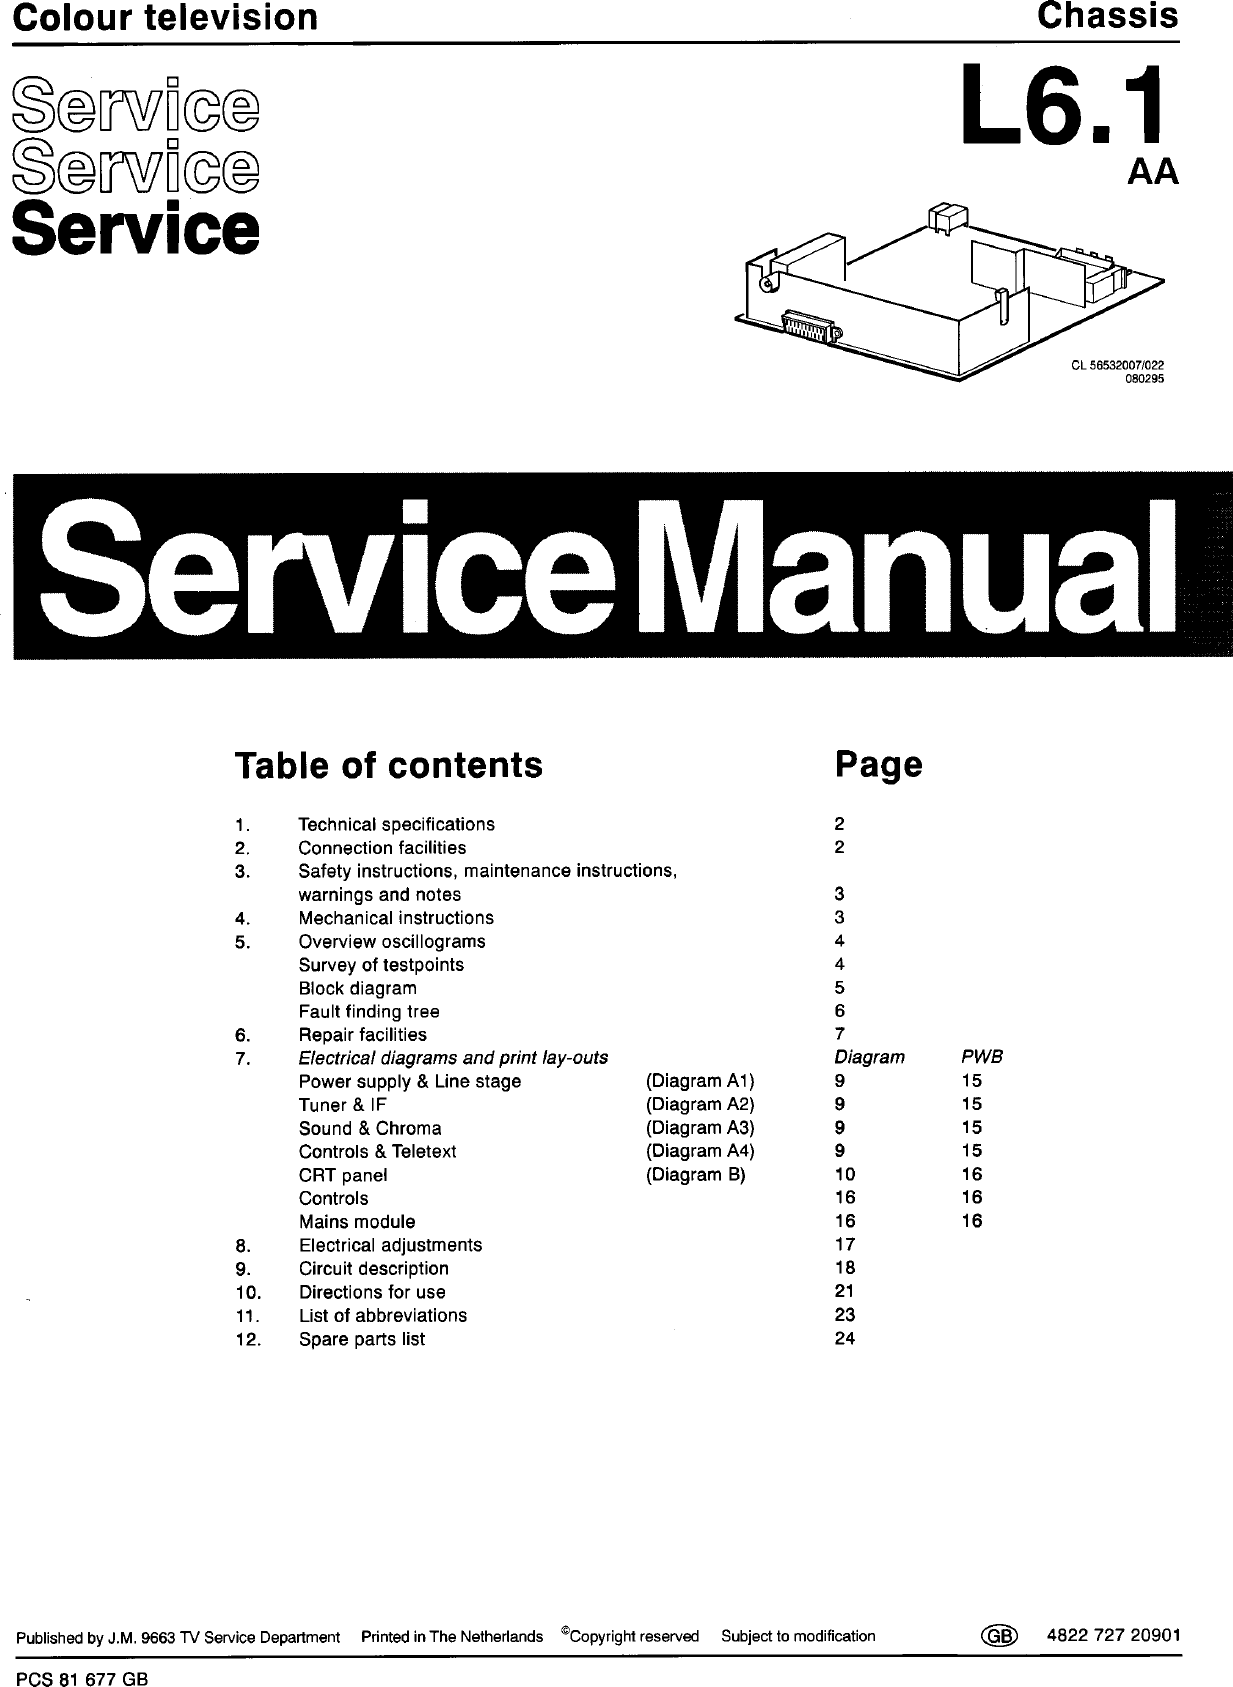 Service manual philips. Телевизор Philips l6.1 AA. Шасси l 6.1. Philips SCA 1 service manual. 14pt1353/58 service manual.